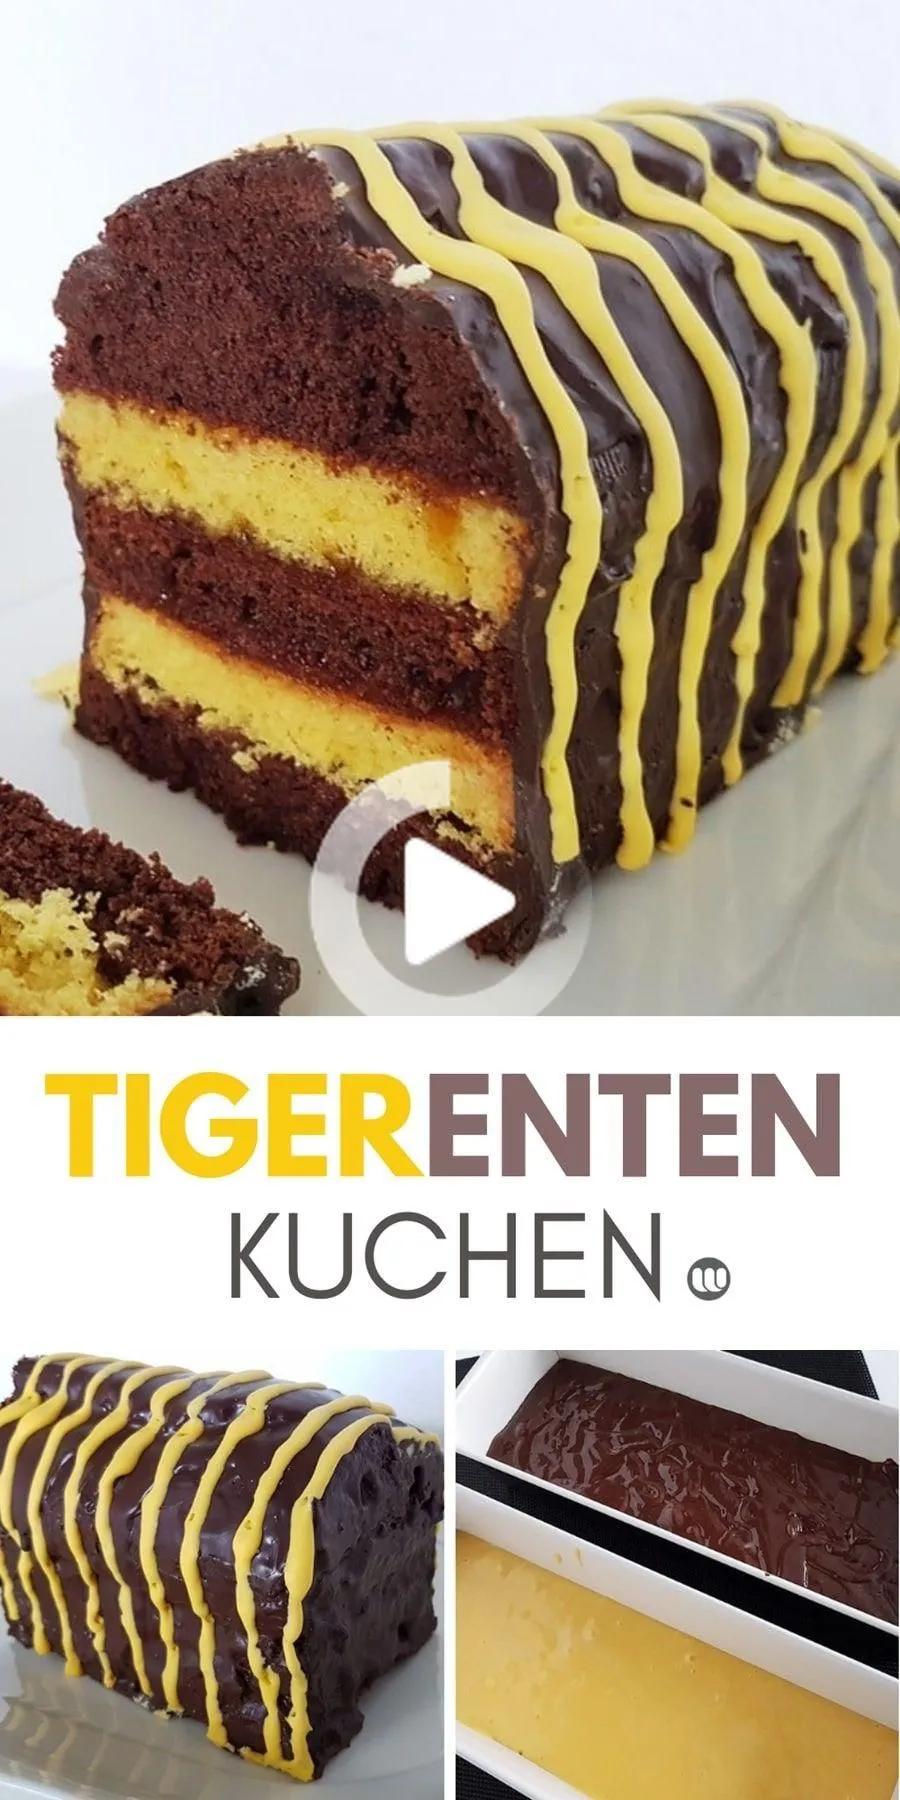 Tigerenten-Kuchen - Rezept &amp; Anleitung für Tigerentenfans ...